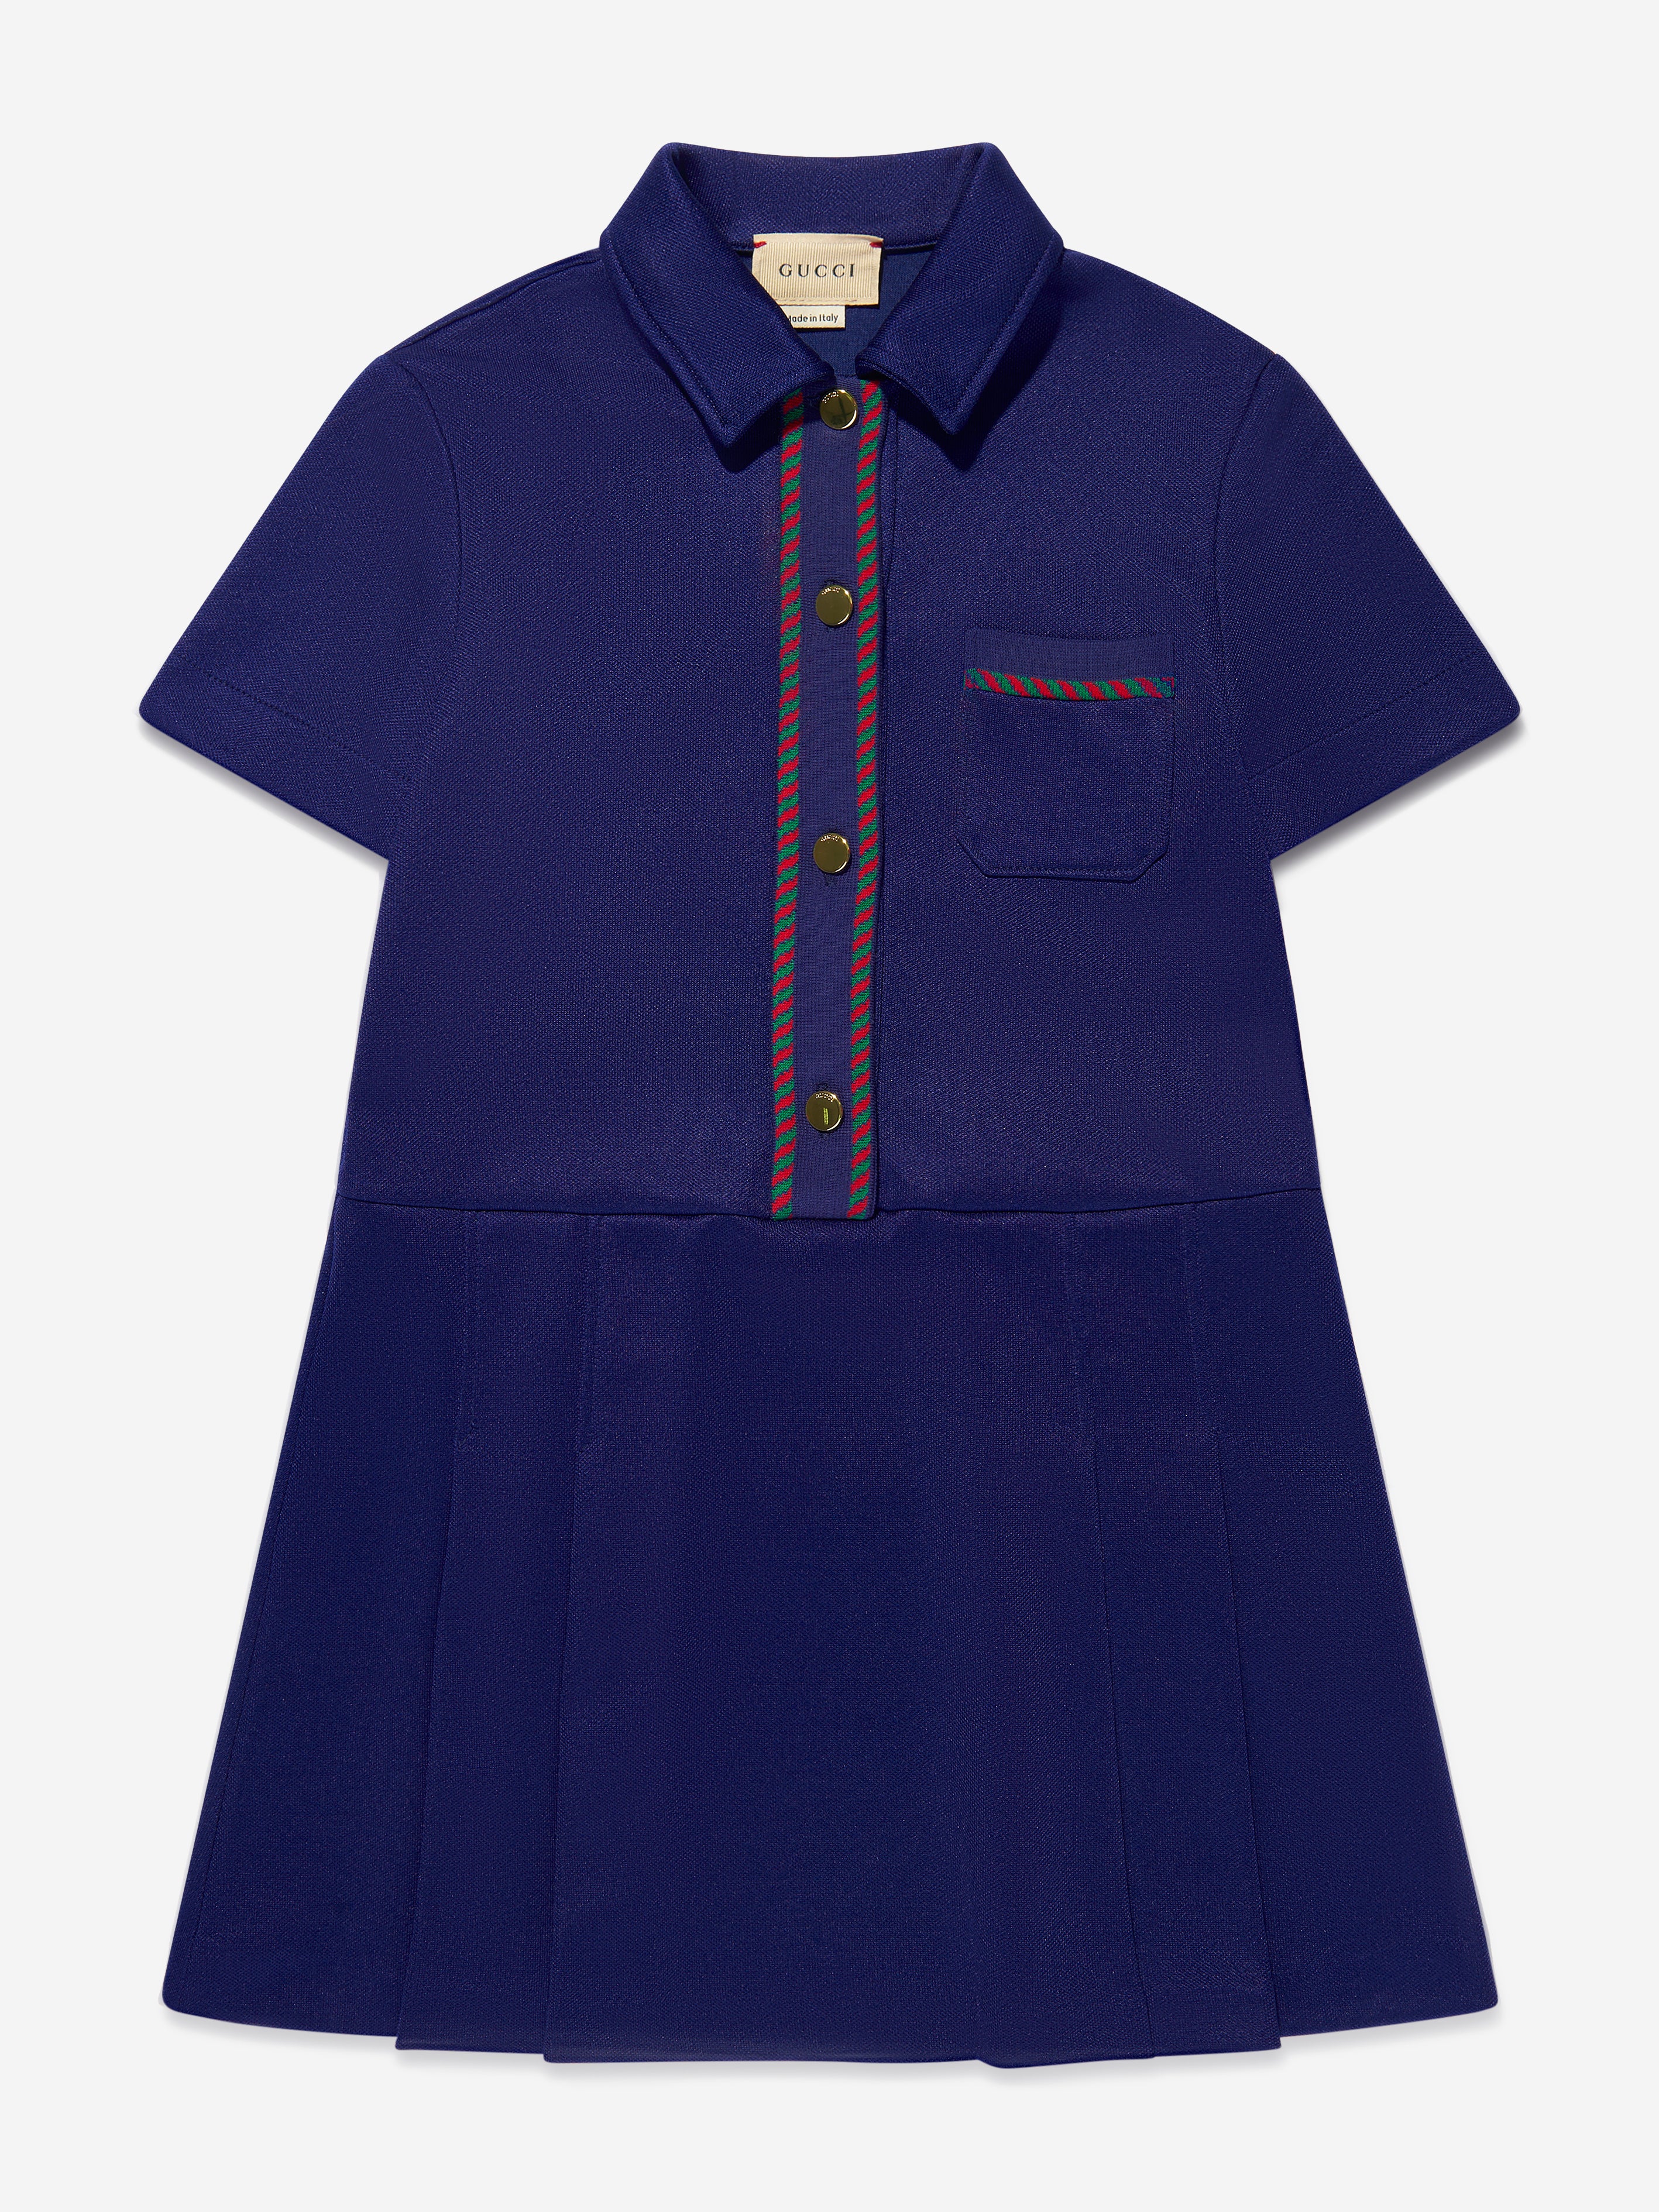 Gucci Kids Girls Pocket Dress in Navy 4 yrs Blue